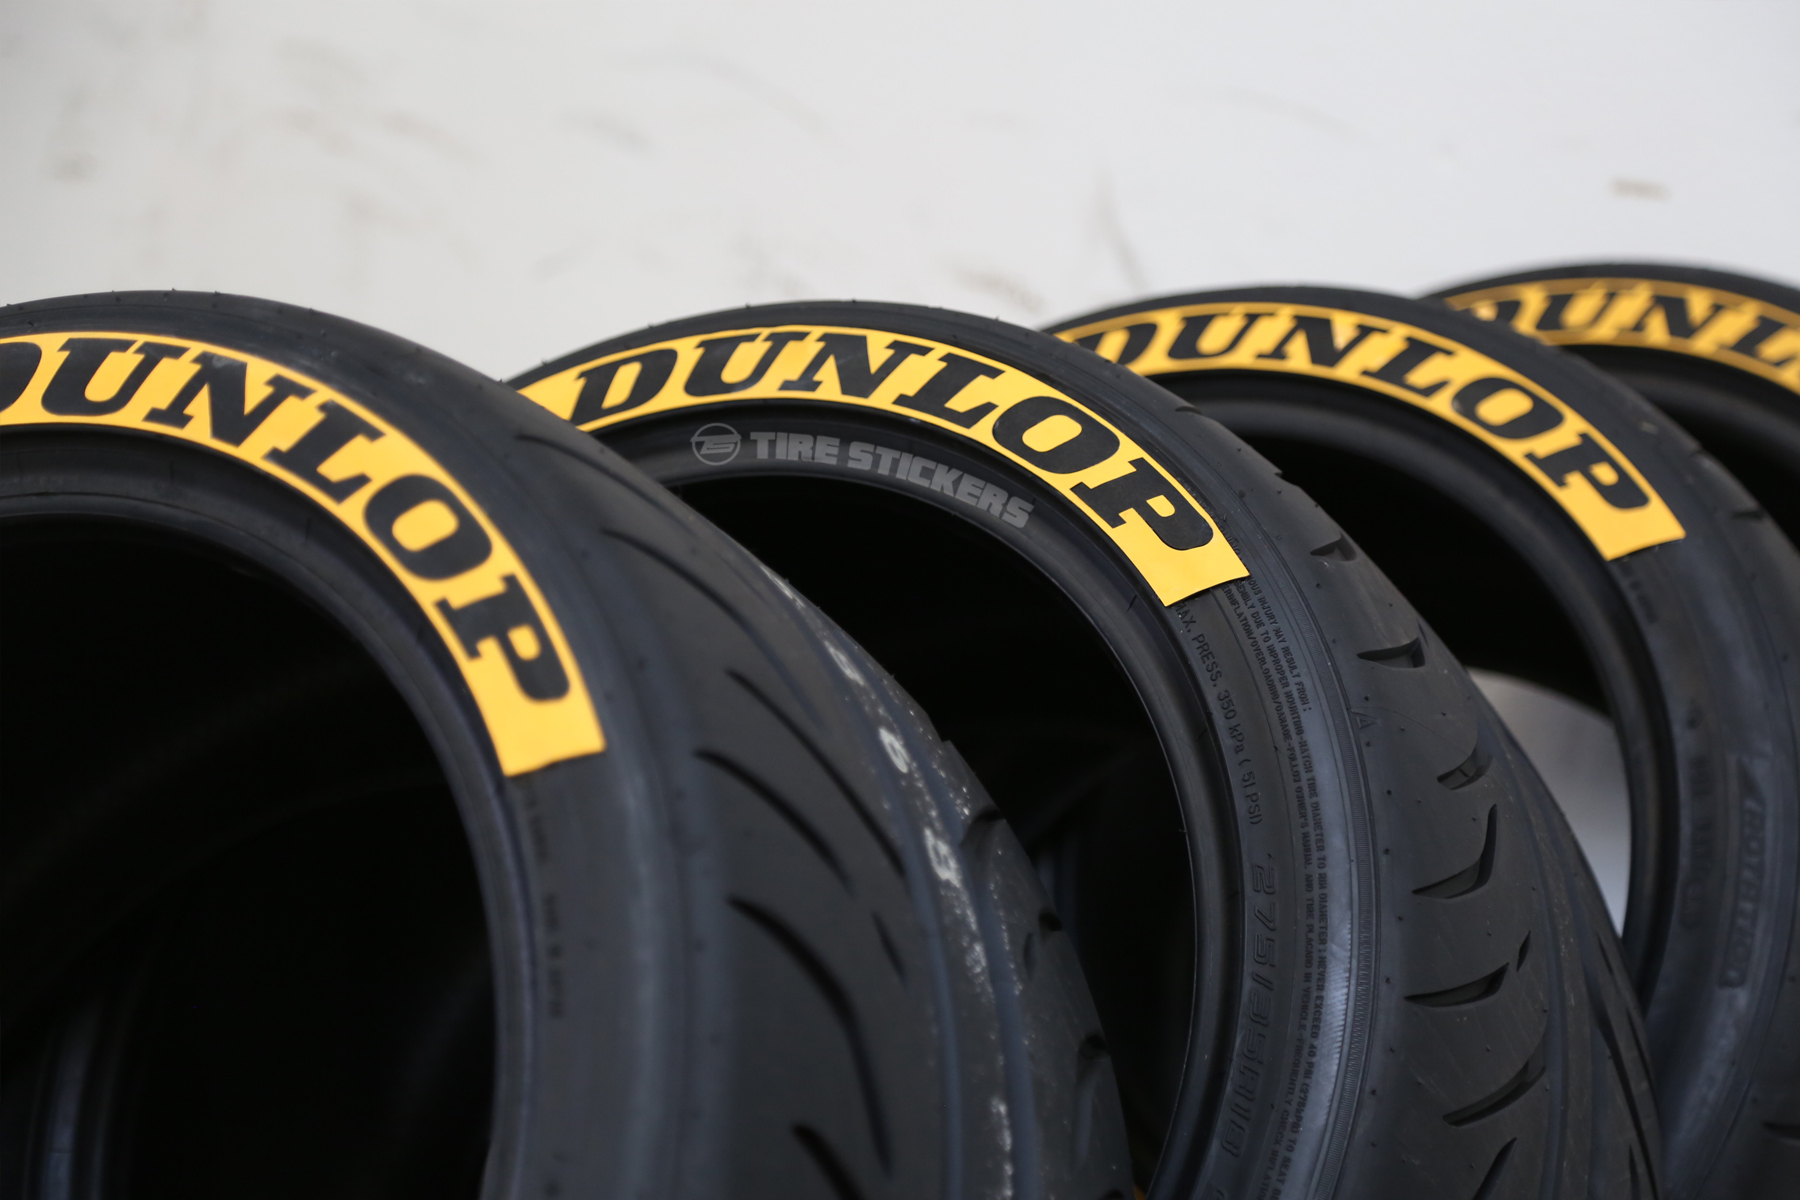 Dunlop Tire Quality